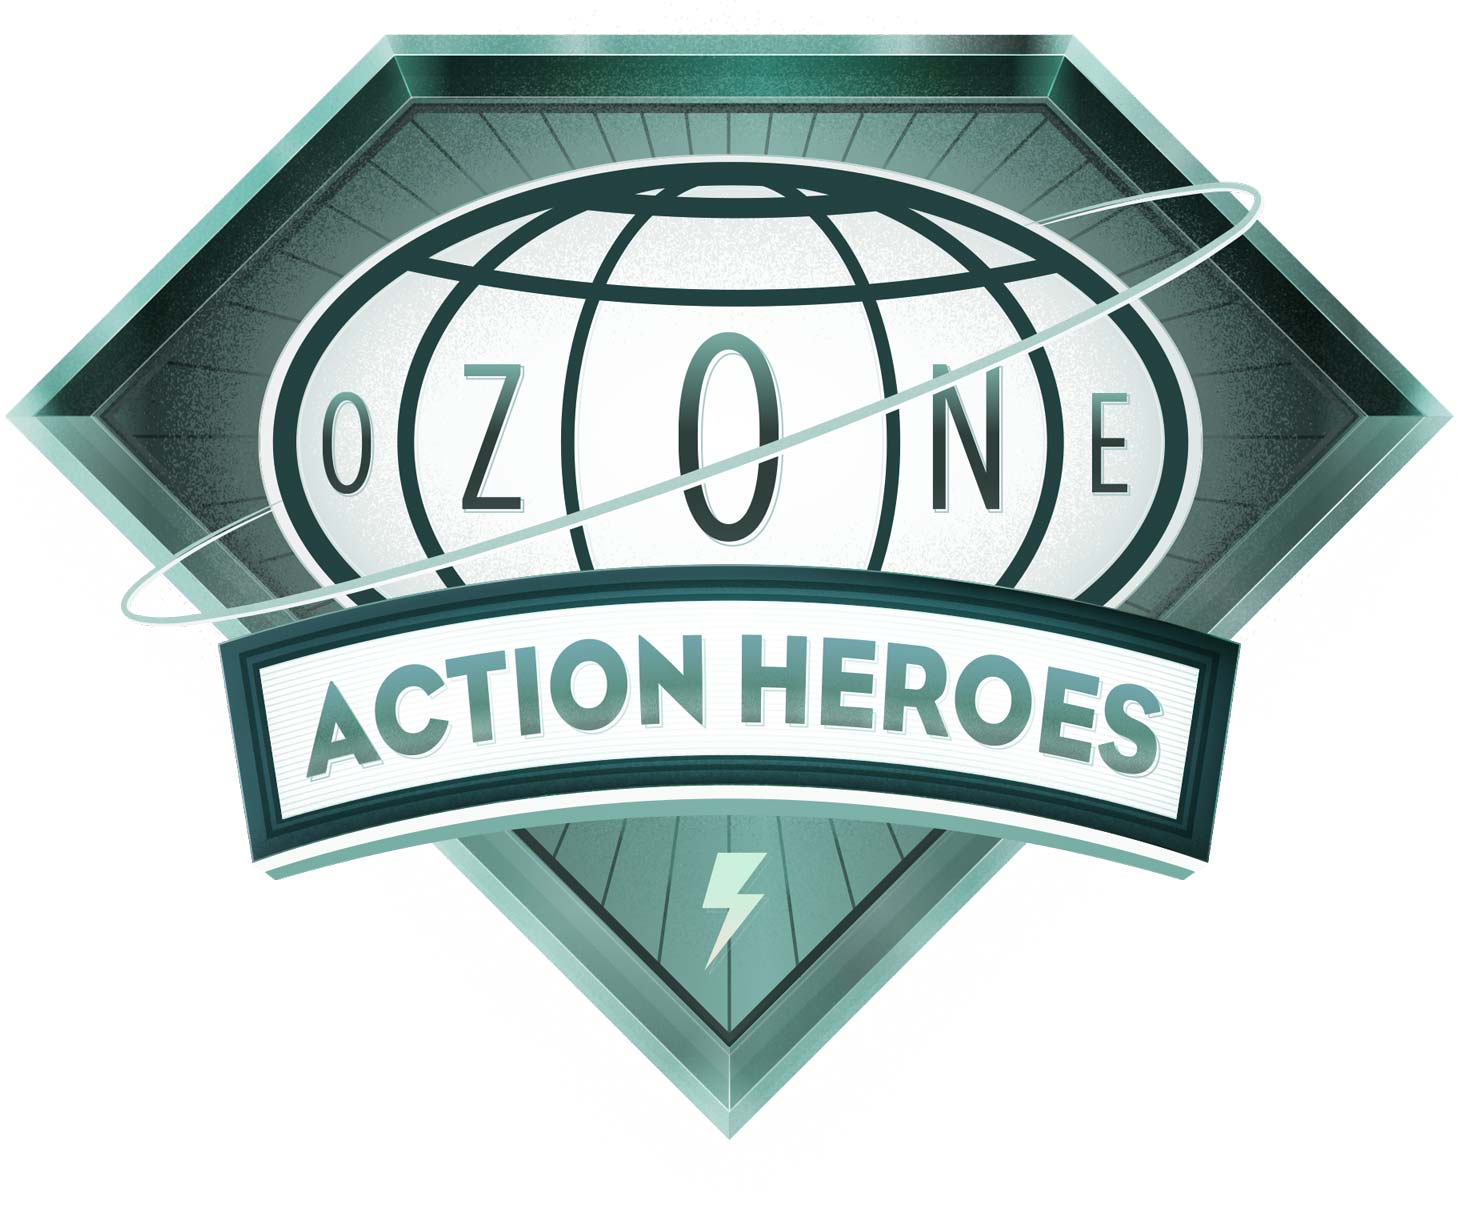 Ozone Action Heroes Logo